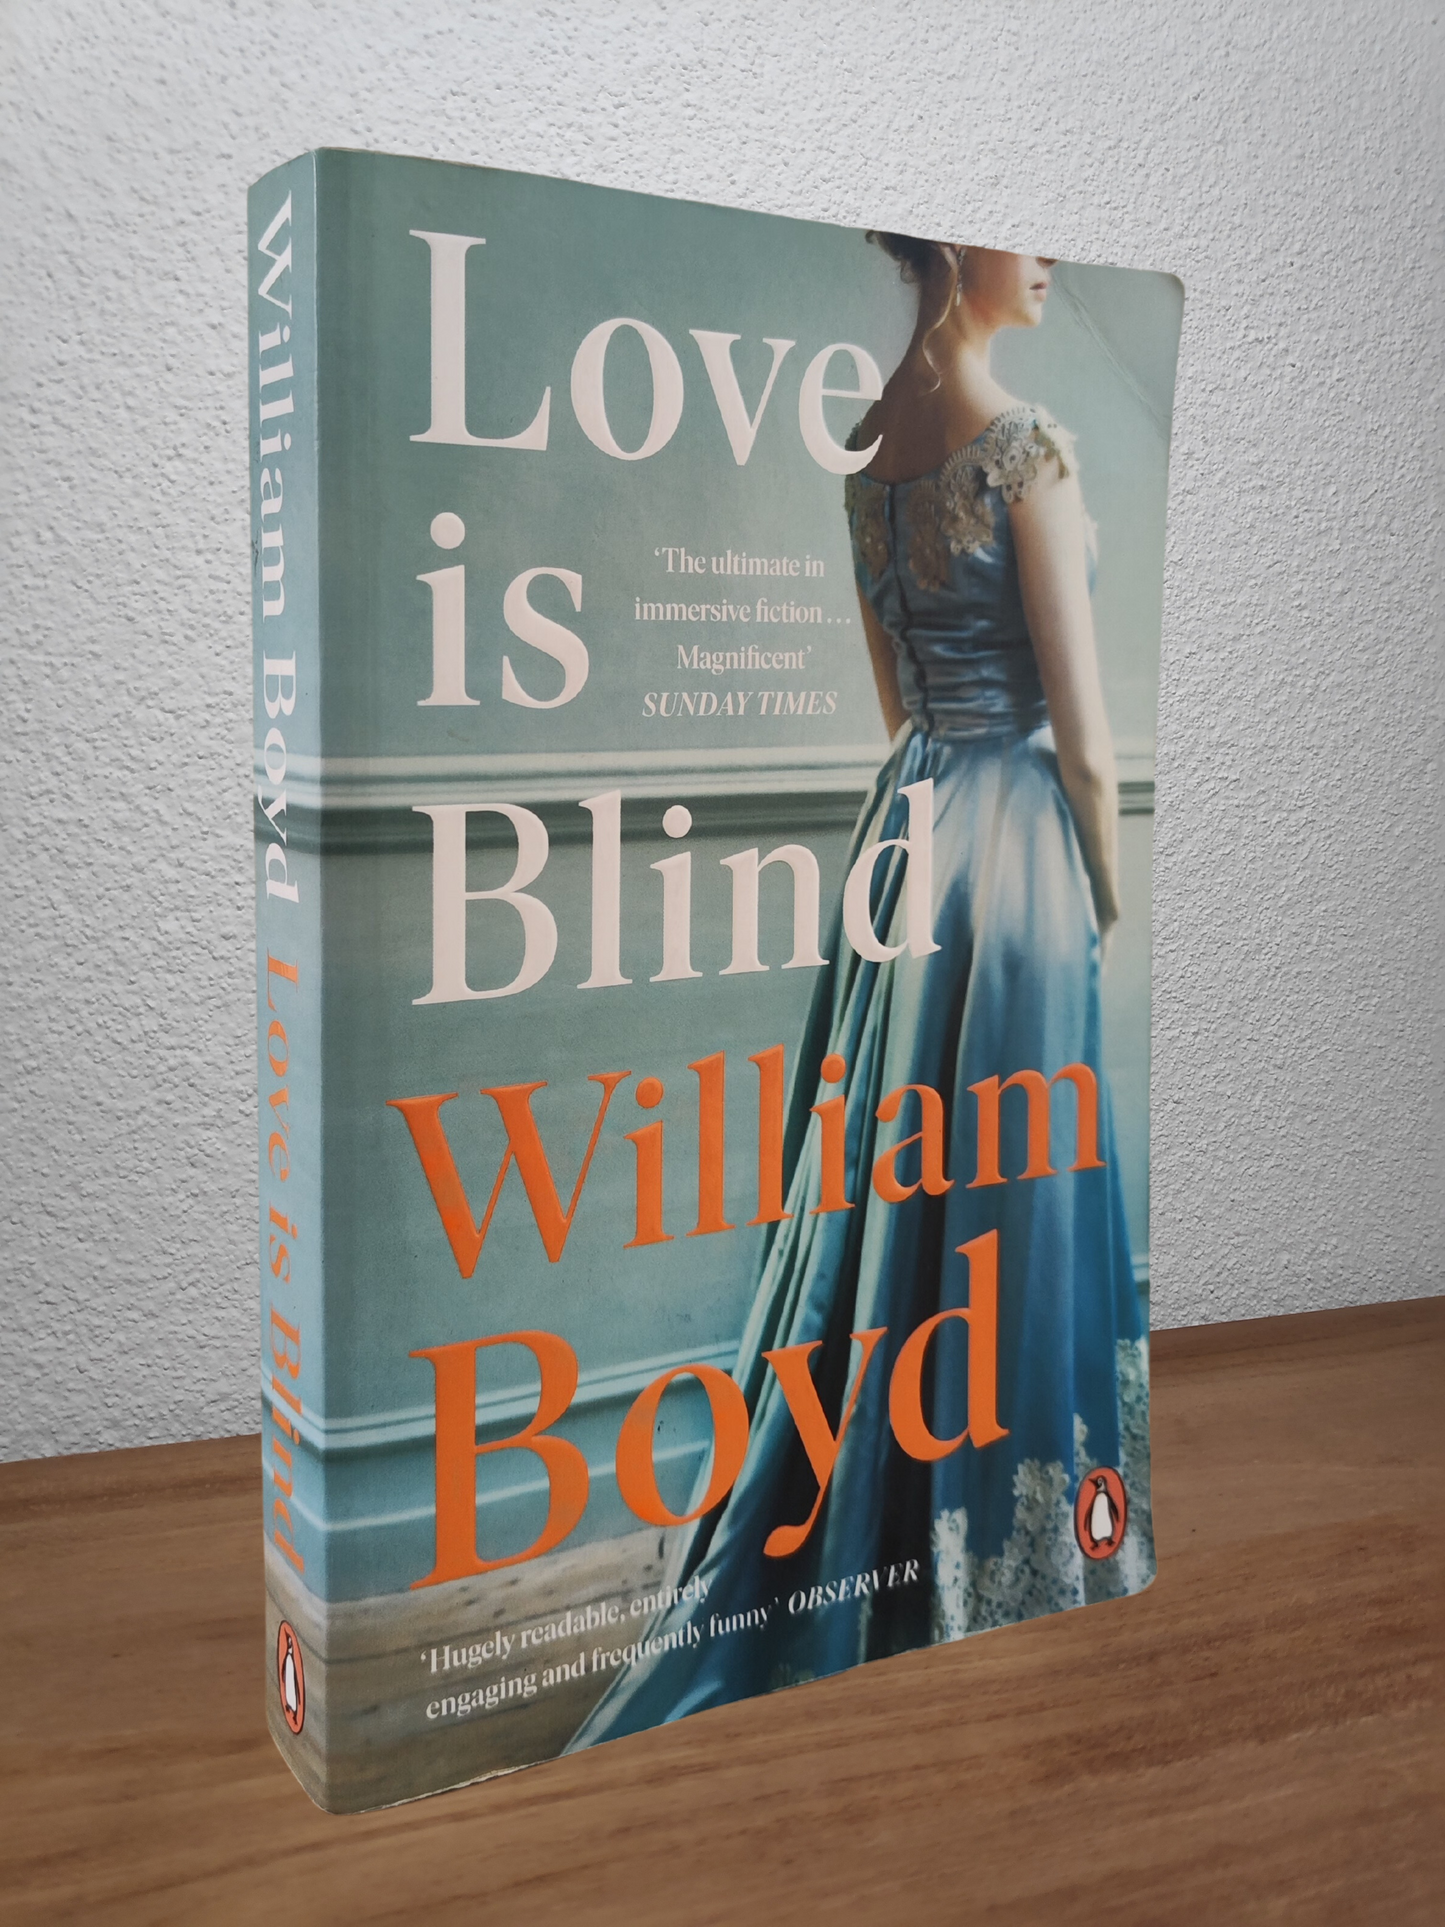 William Boyd - Love is Blind